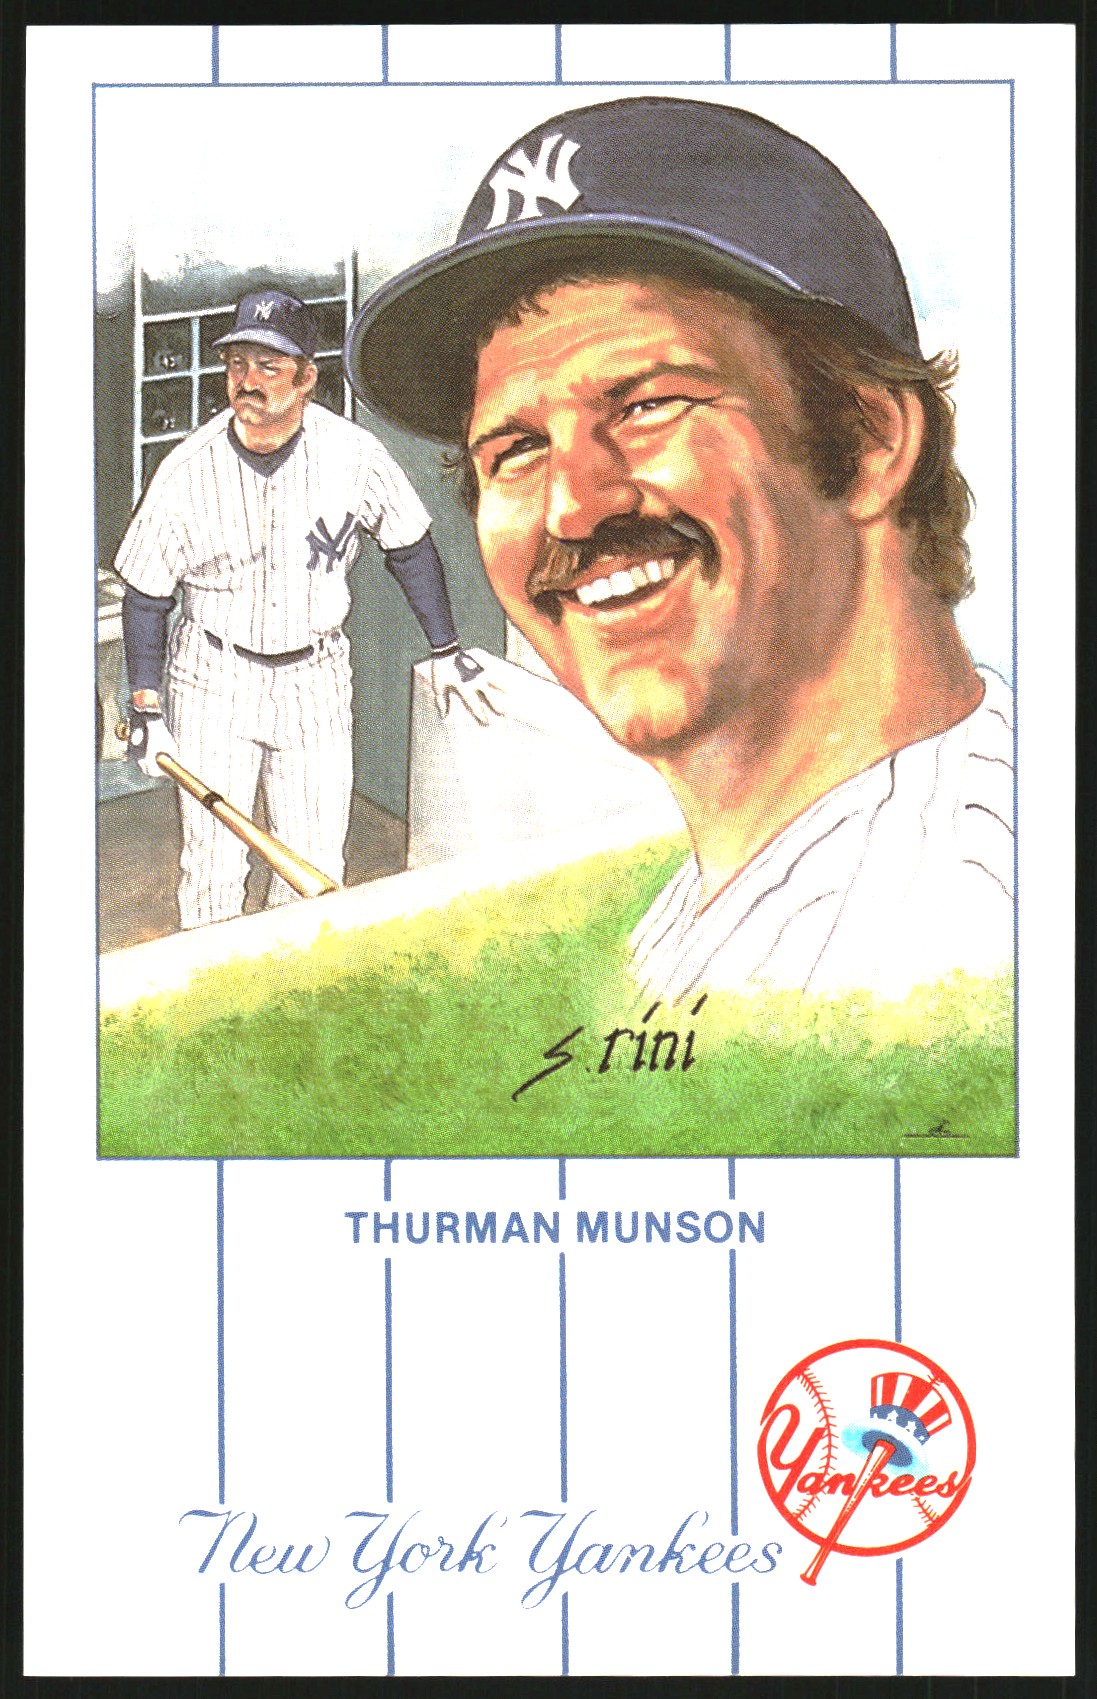 1990 Rini Postcards Munson #5 Thurman Munson/(Standing with bat/in right hand)